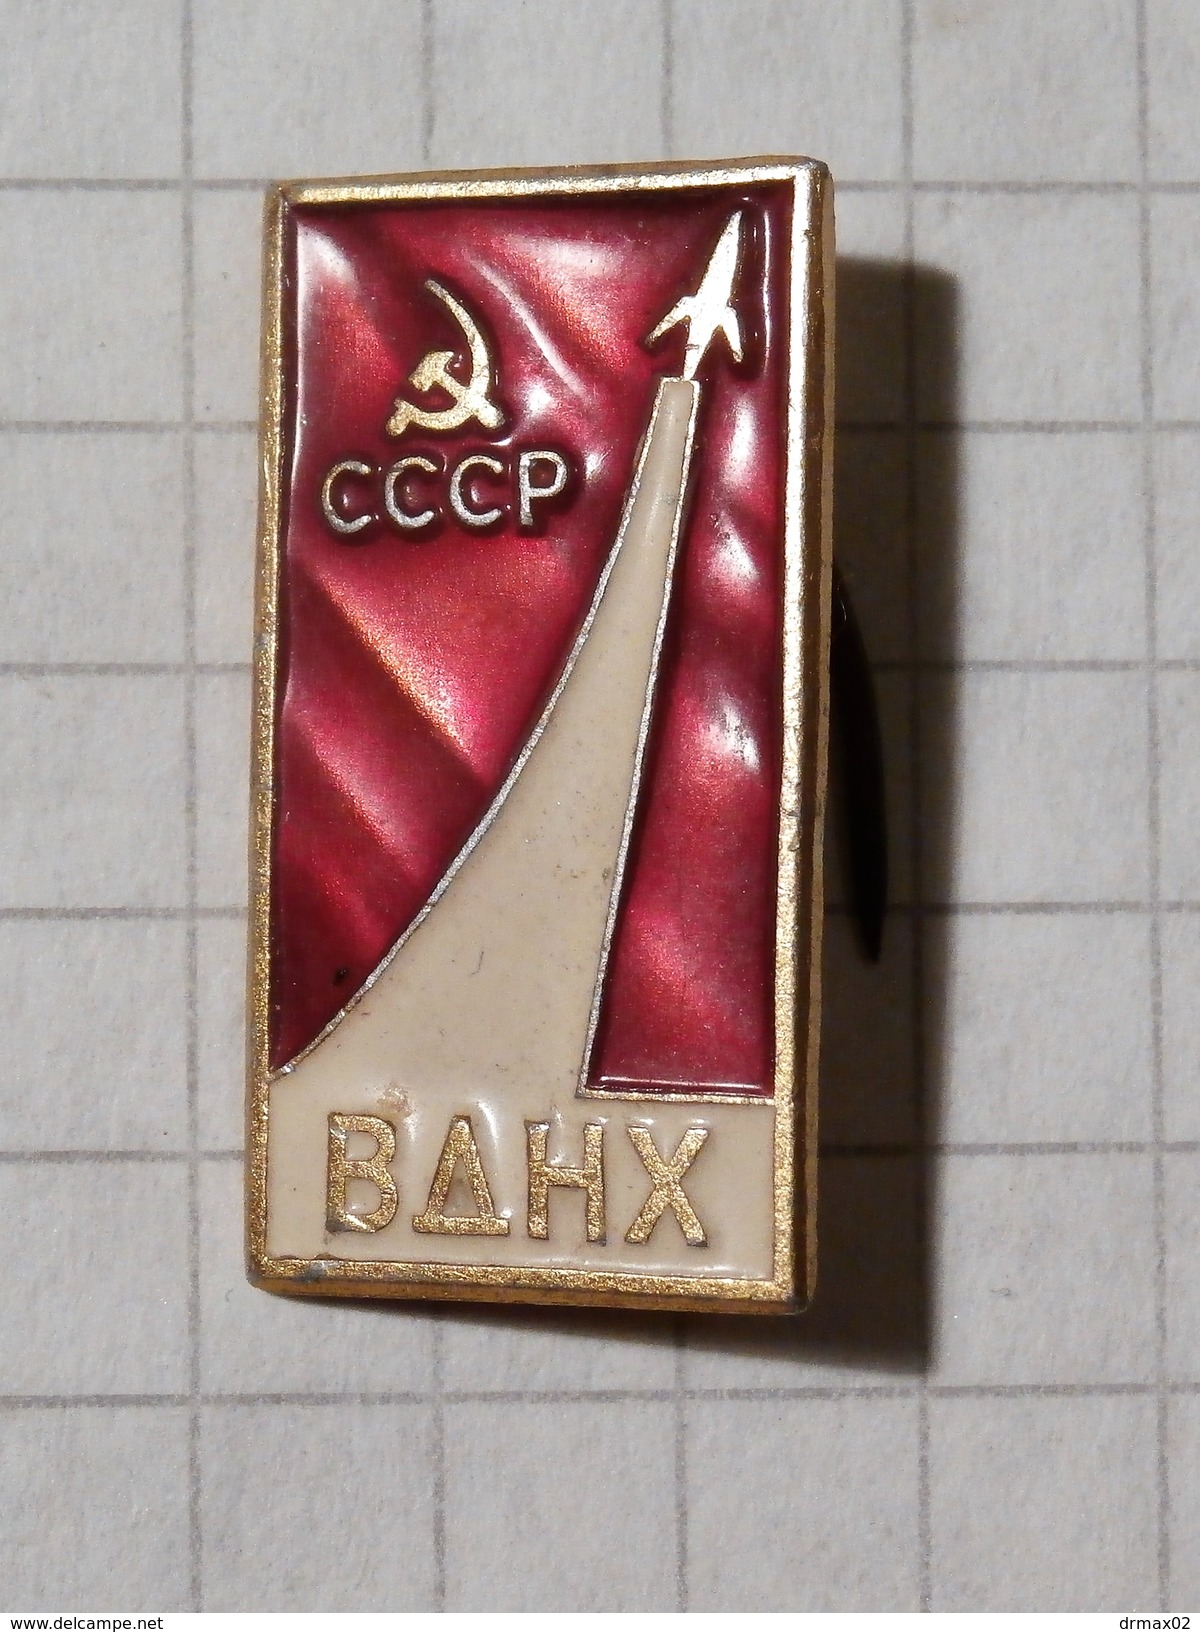 ROCKET VDNH SOVIET RUSSIAN SPACE / USSR - Spazio